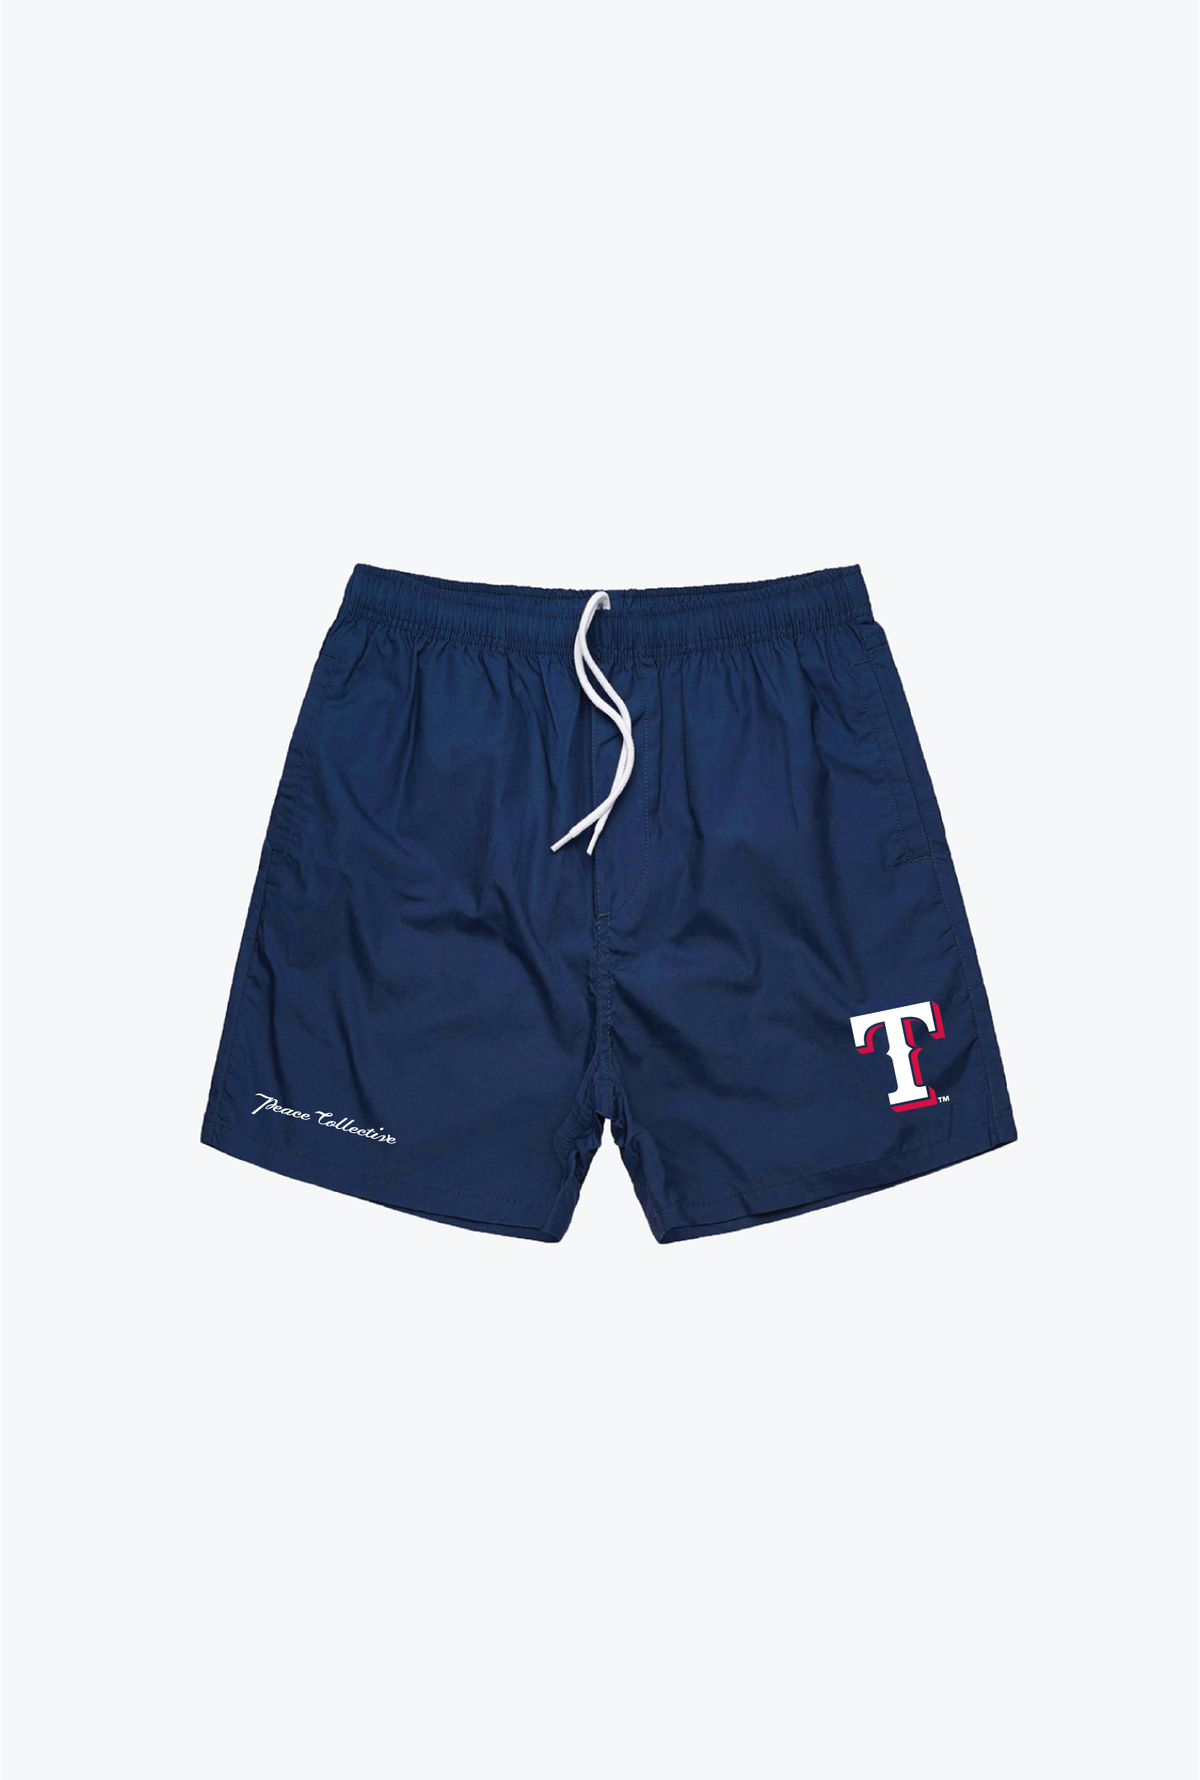 Texas Rangers Board Shorts - Navy